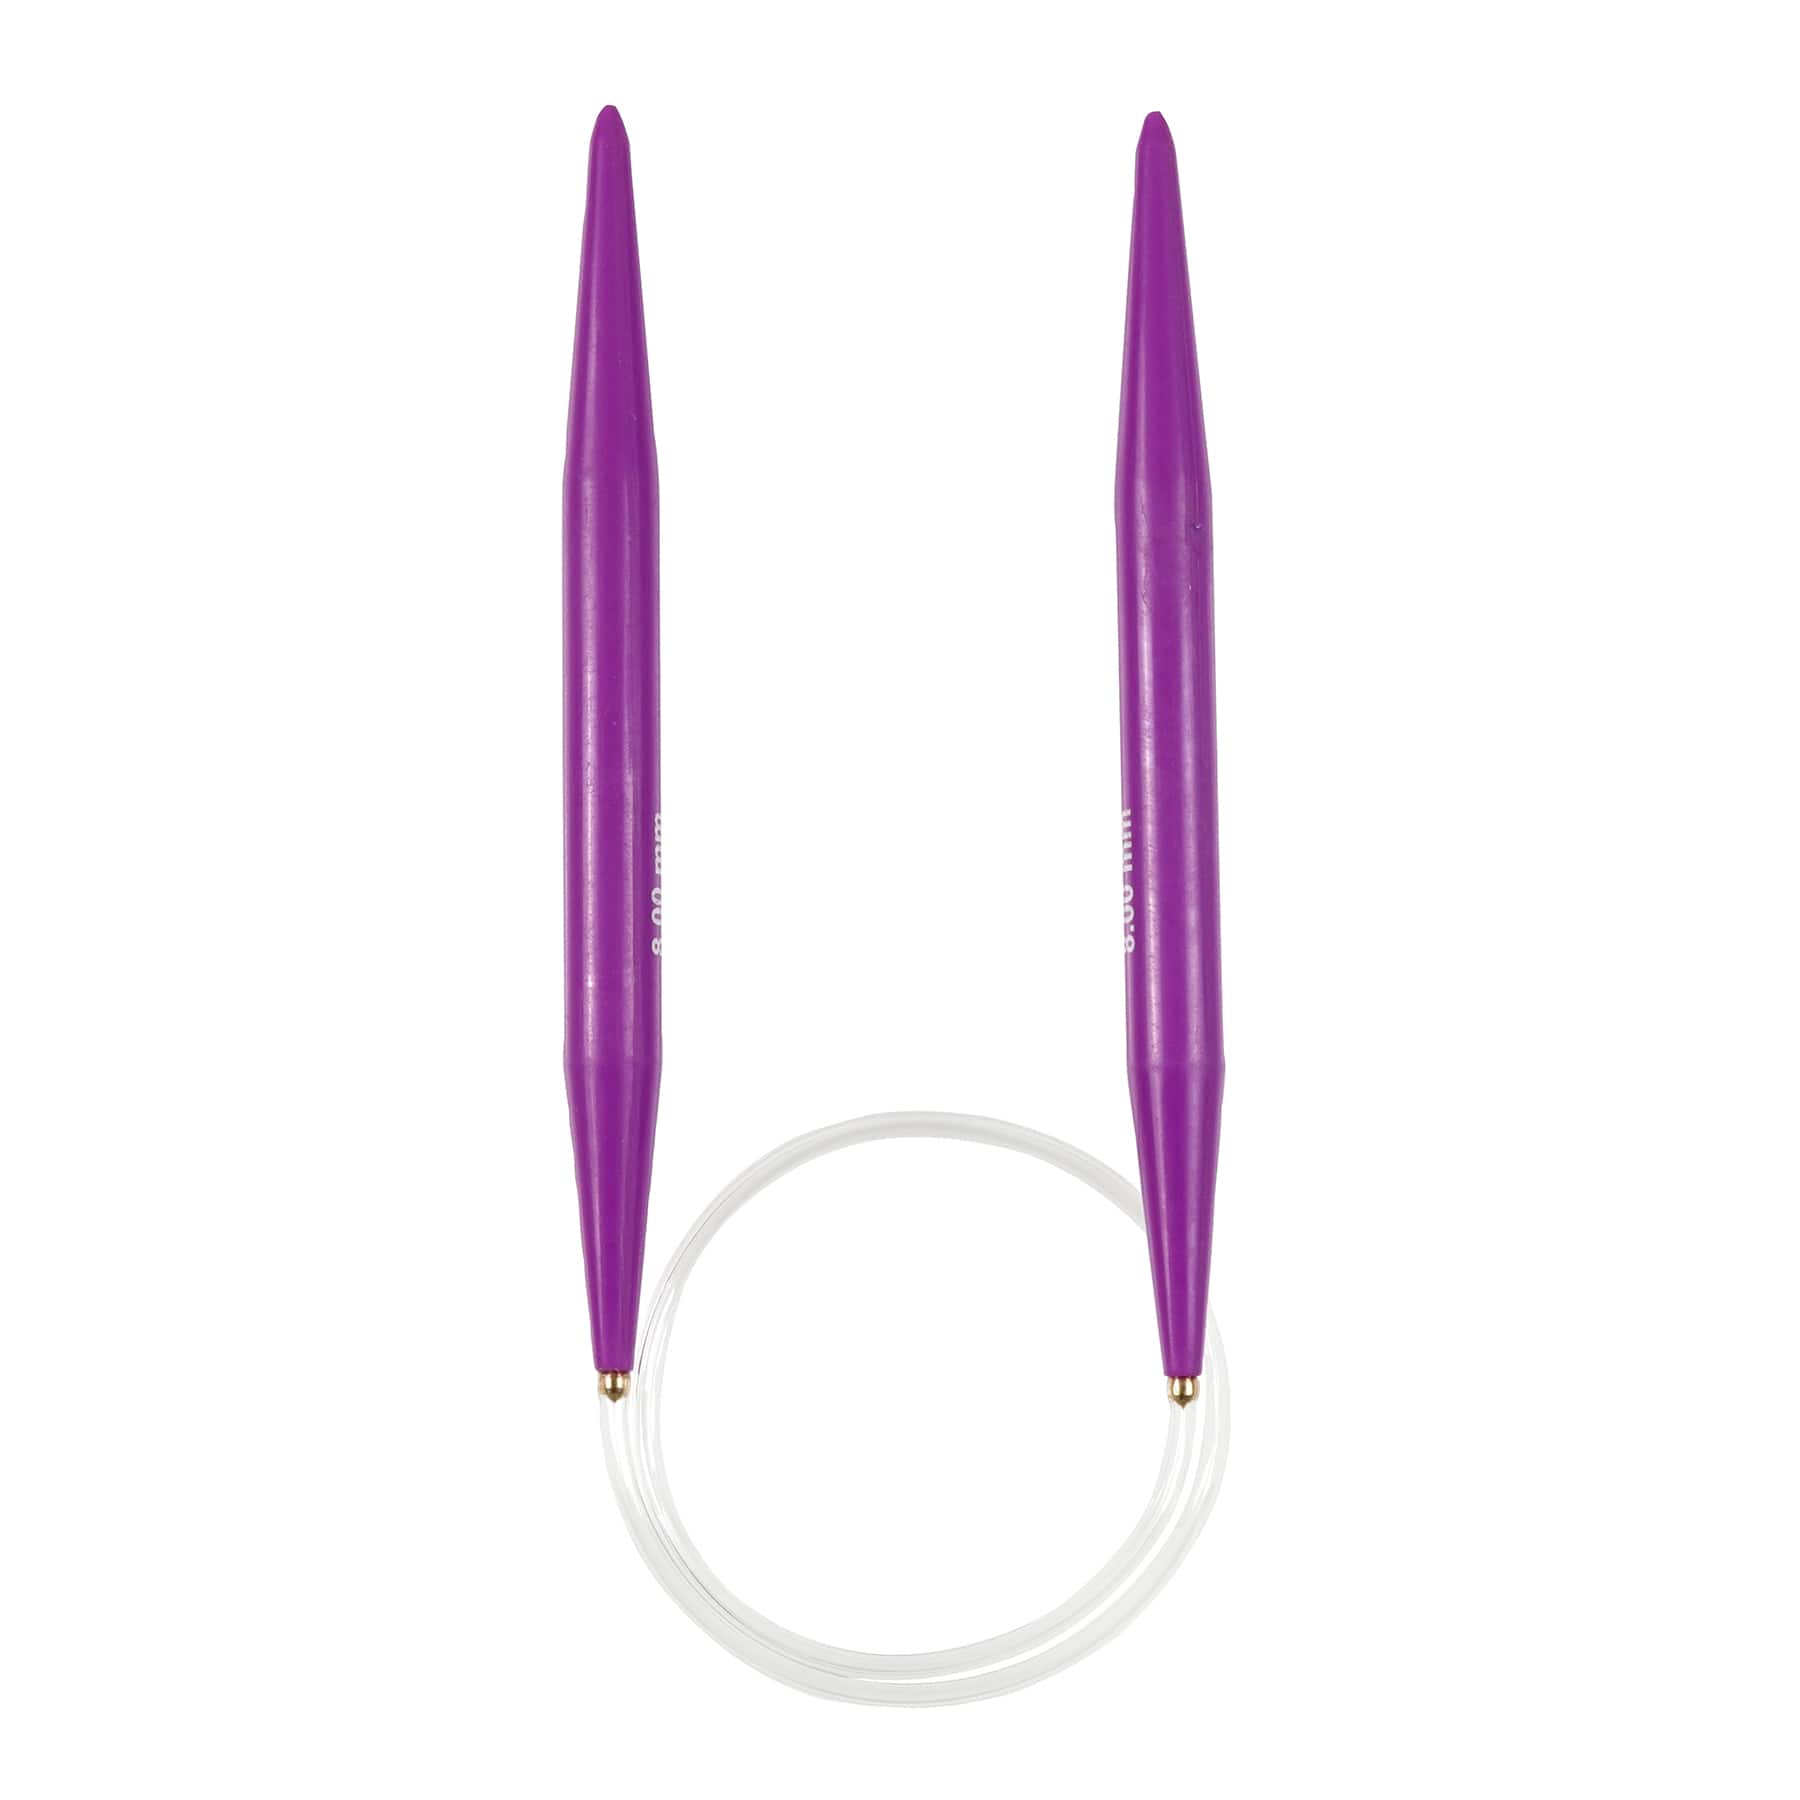 16 Circular Knitting Needles by Loops & Threads®